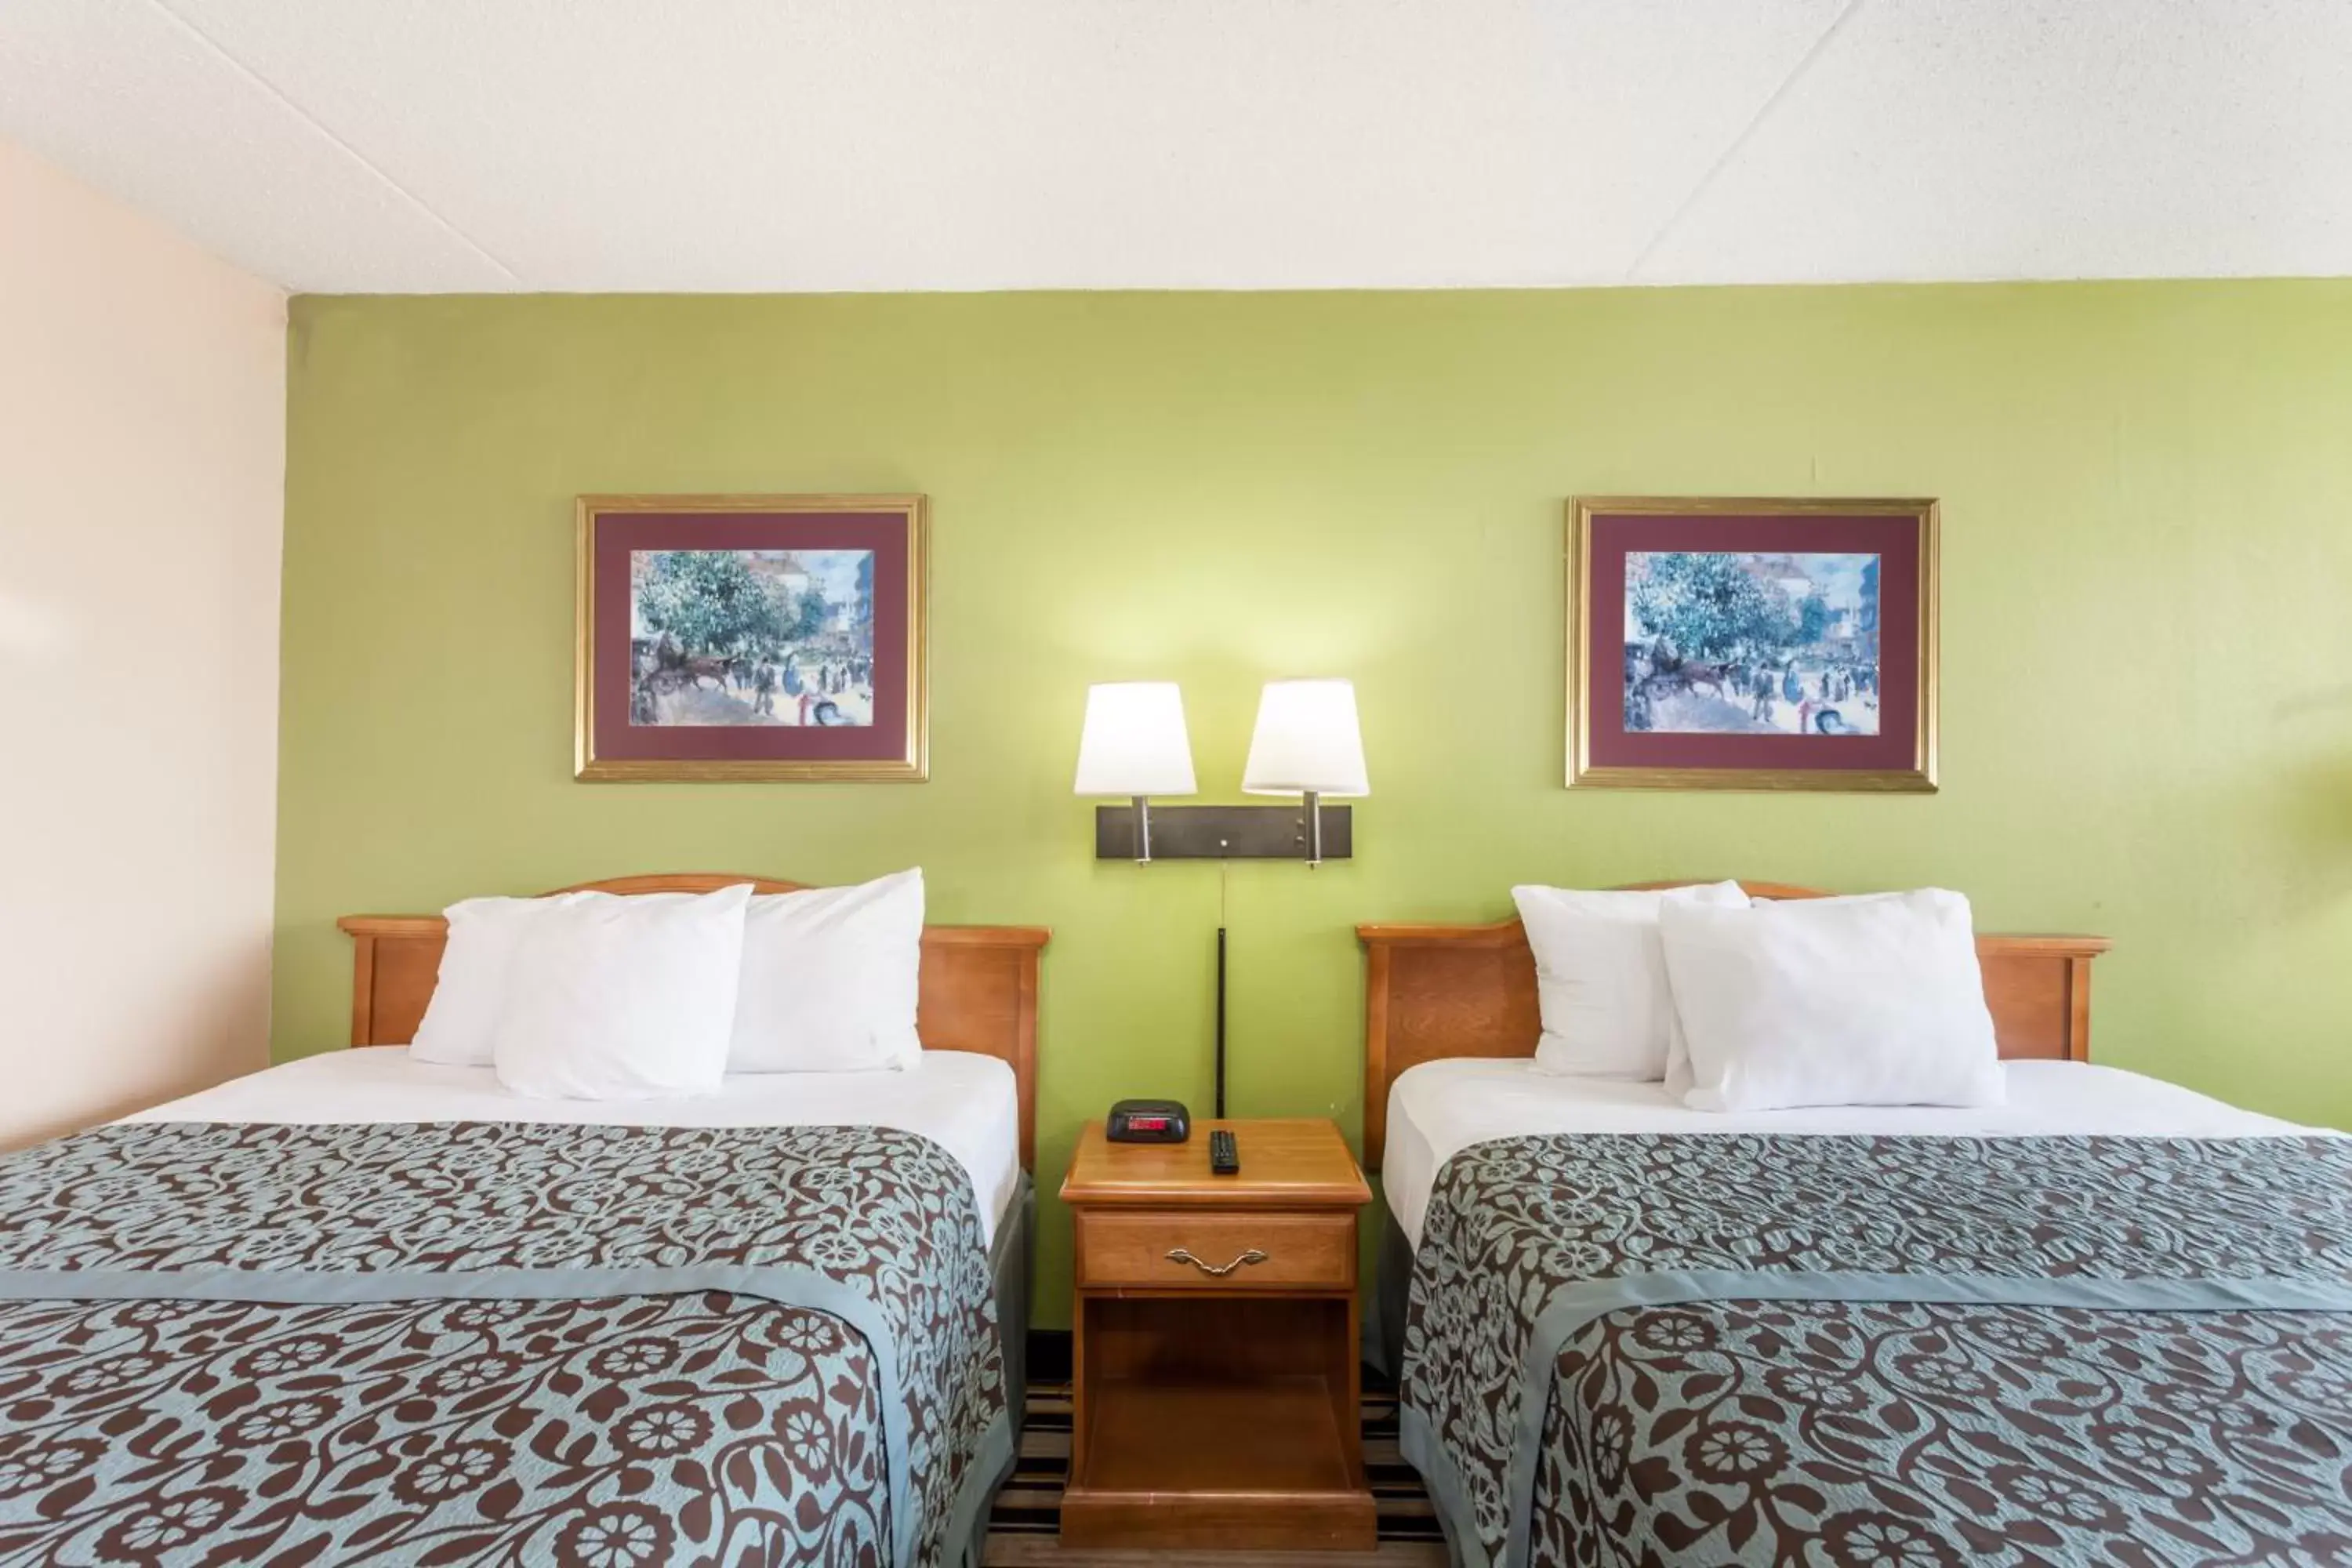 Bed, Room Photo in Days Inn by Wyndham Jackson